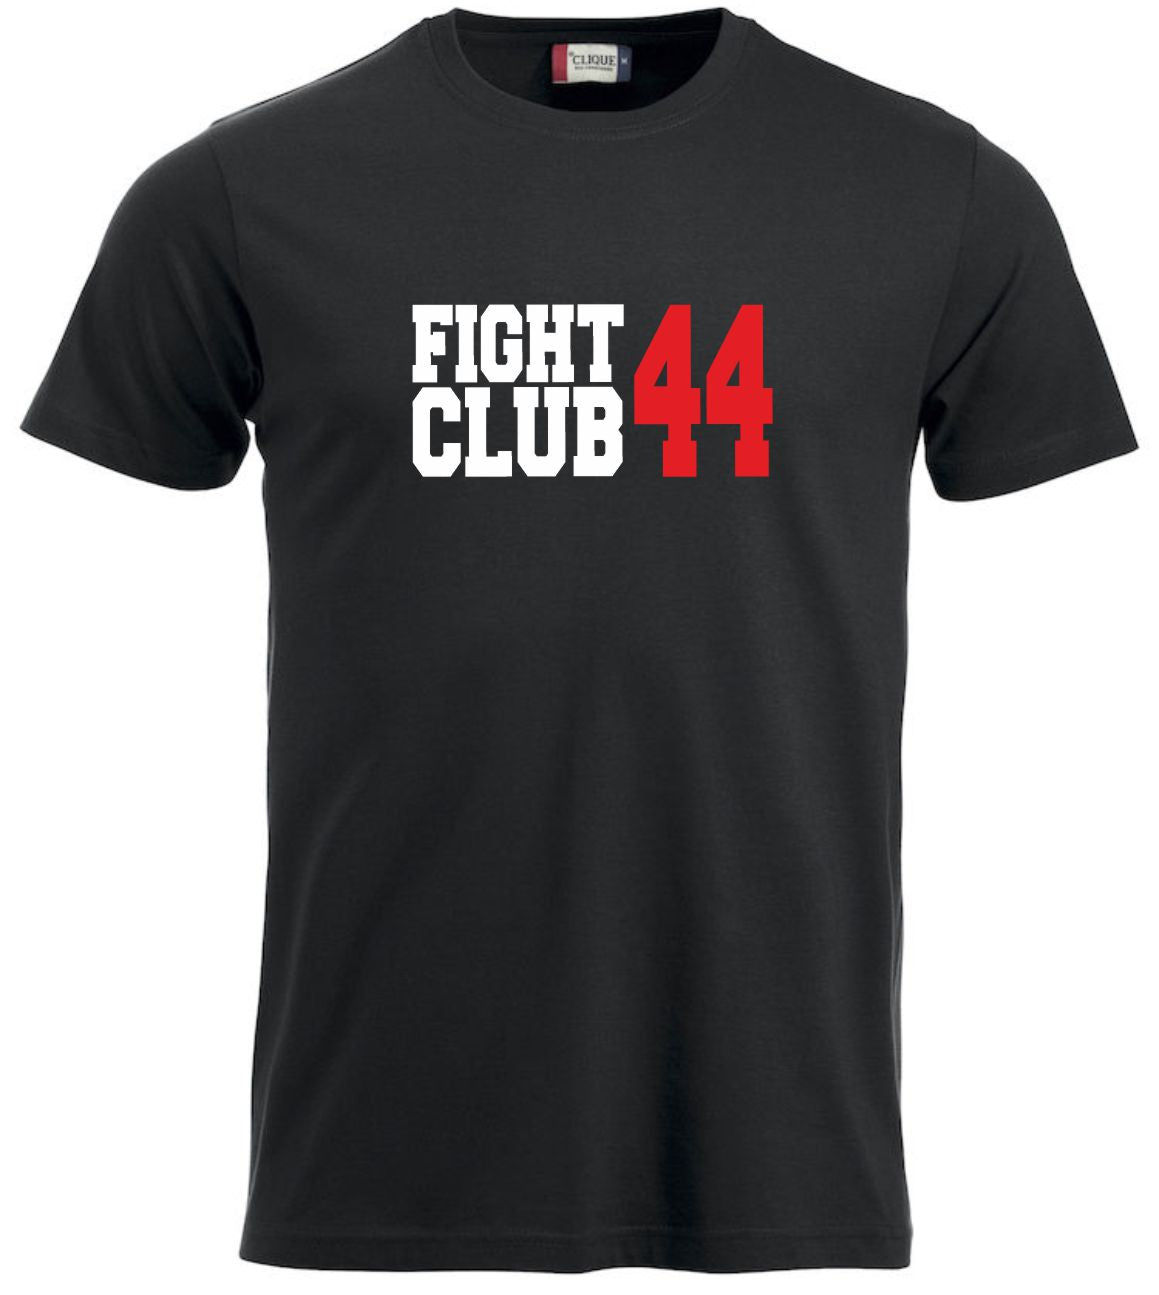 Fight Club 44 T-Shirt Premium